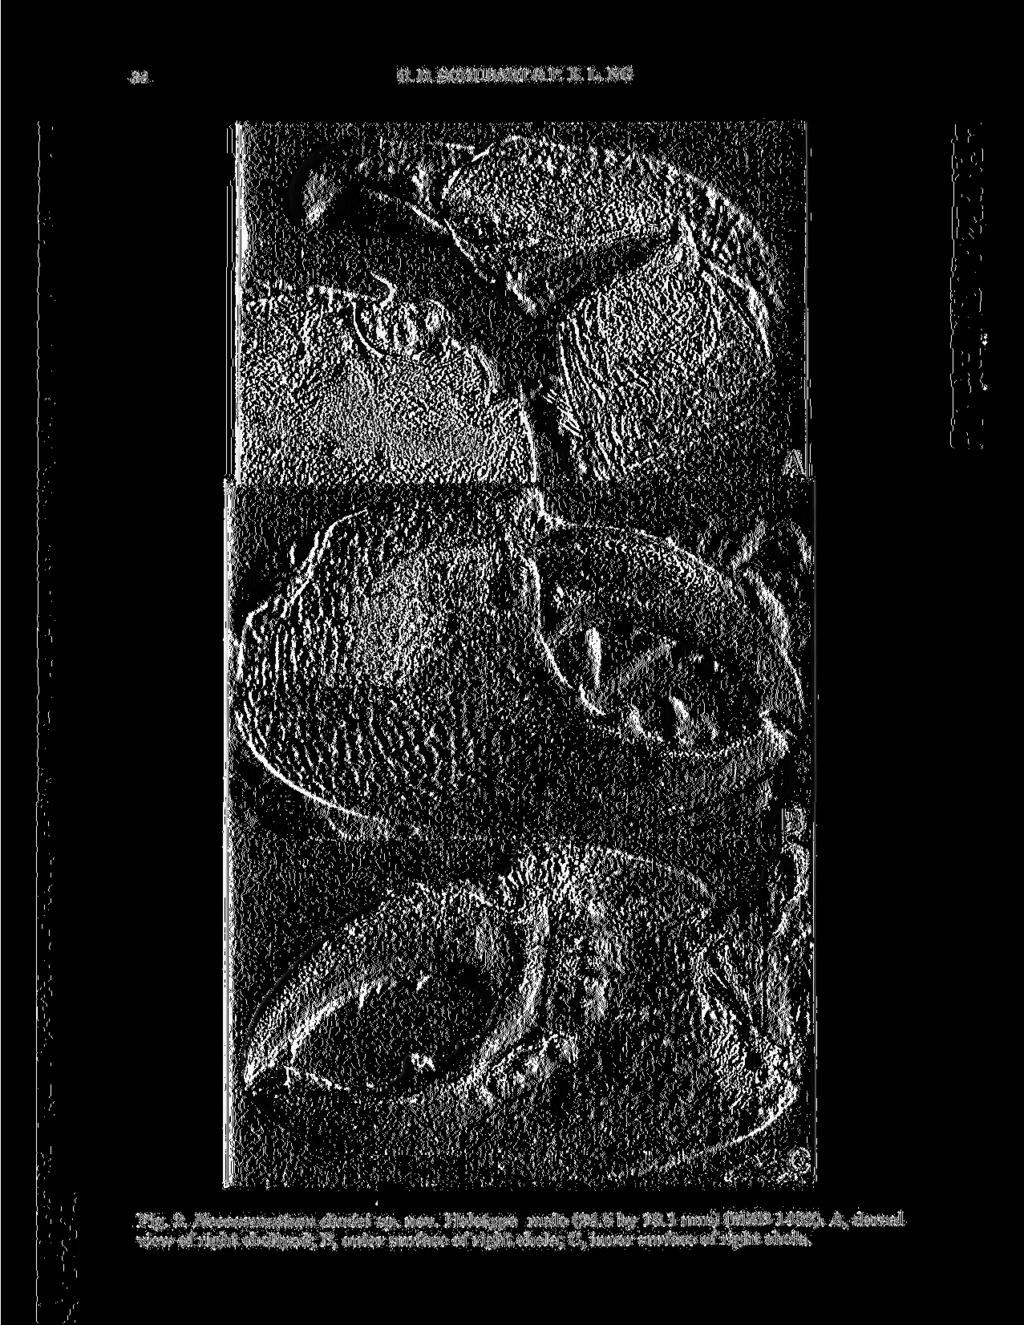 34 C. D. SCHUBART & P. K. L. NG Fig. 2. Neosarmatium daviei sp. nov. Holotype male (24.5 by 19.